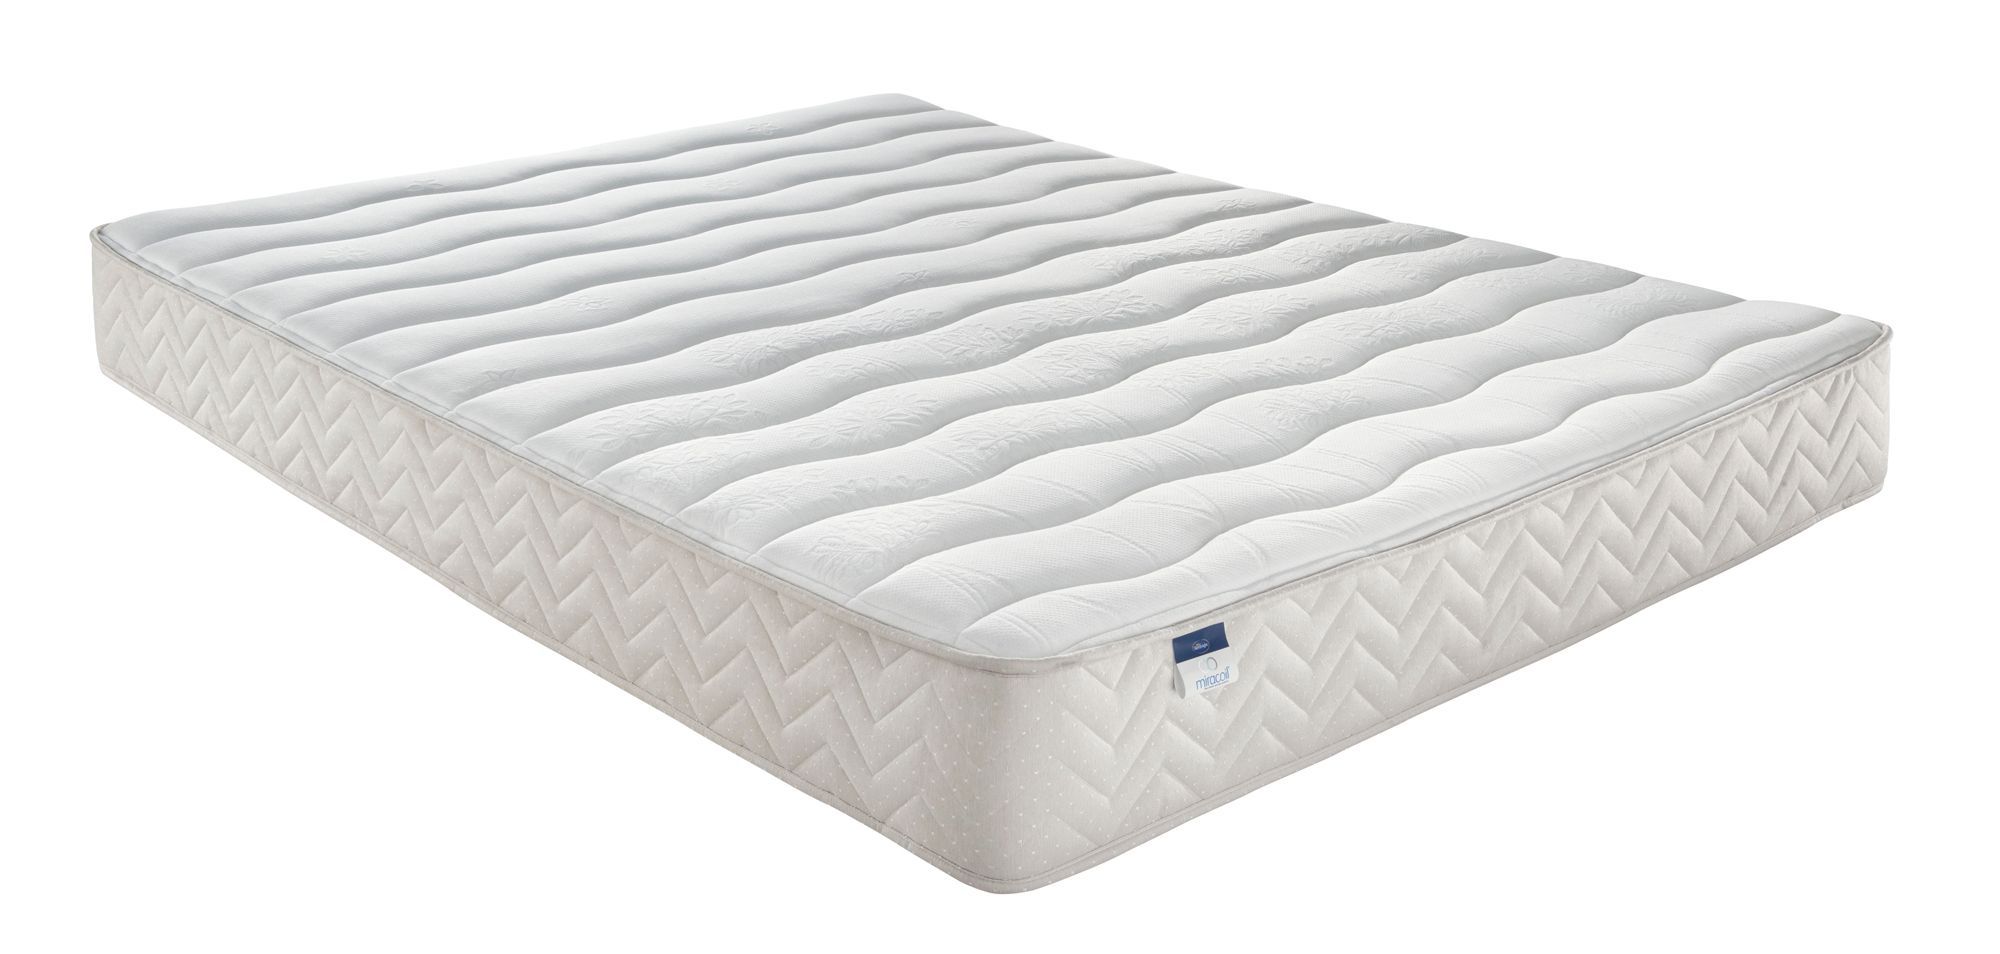 double size miracoil mattress